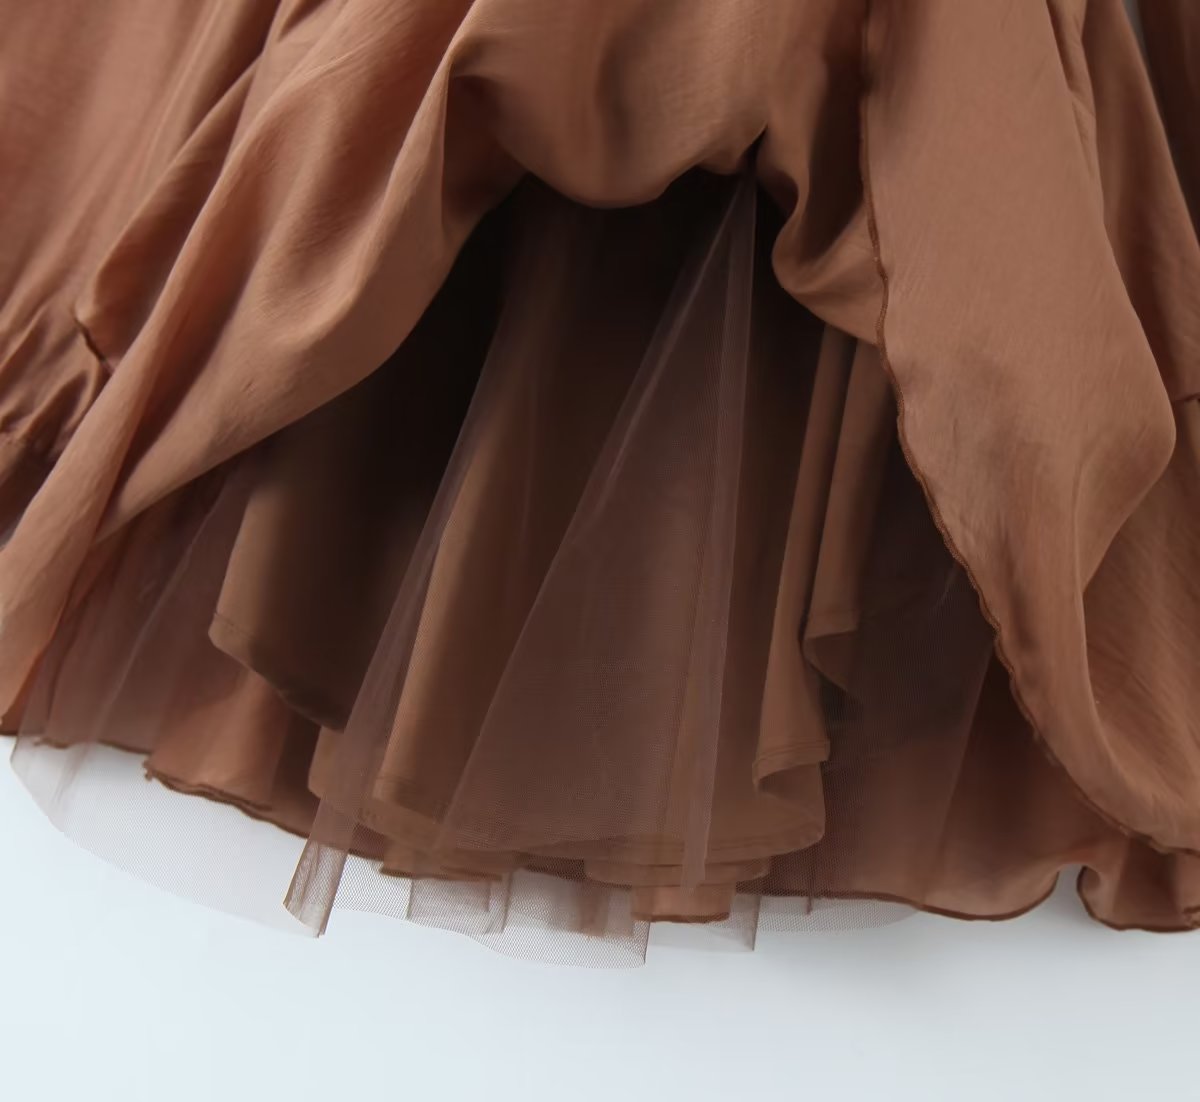 2023 Fashion Trends | Black Floral Brown Aesthetic Ruffles Mini Dress